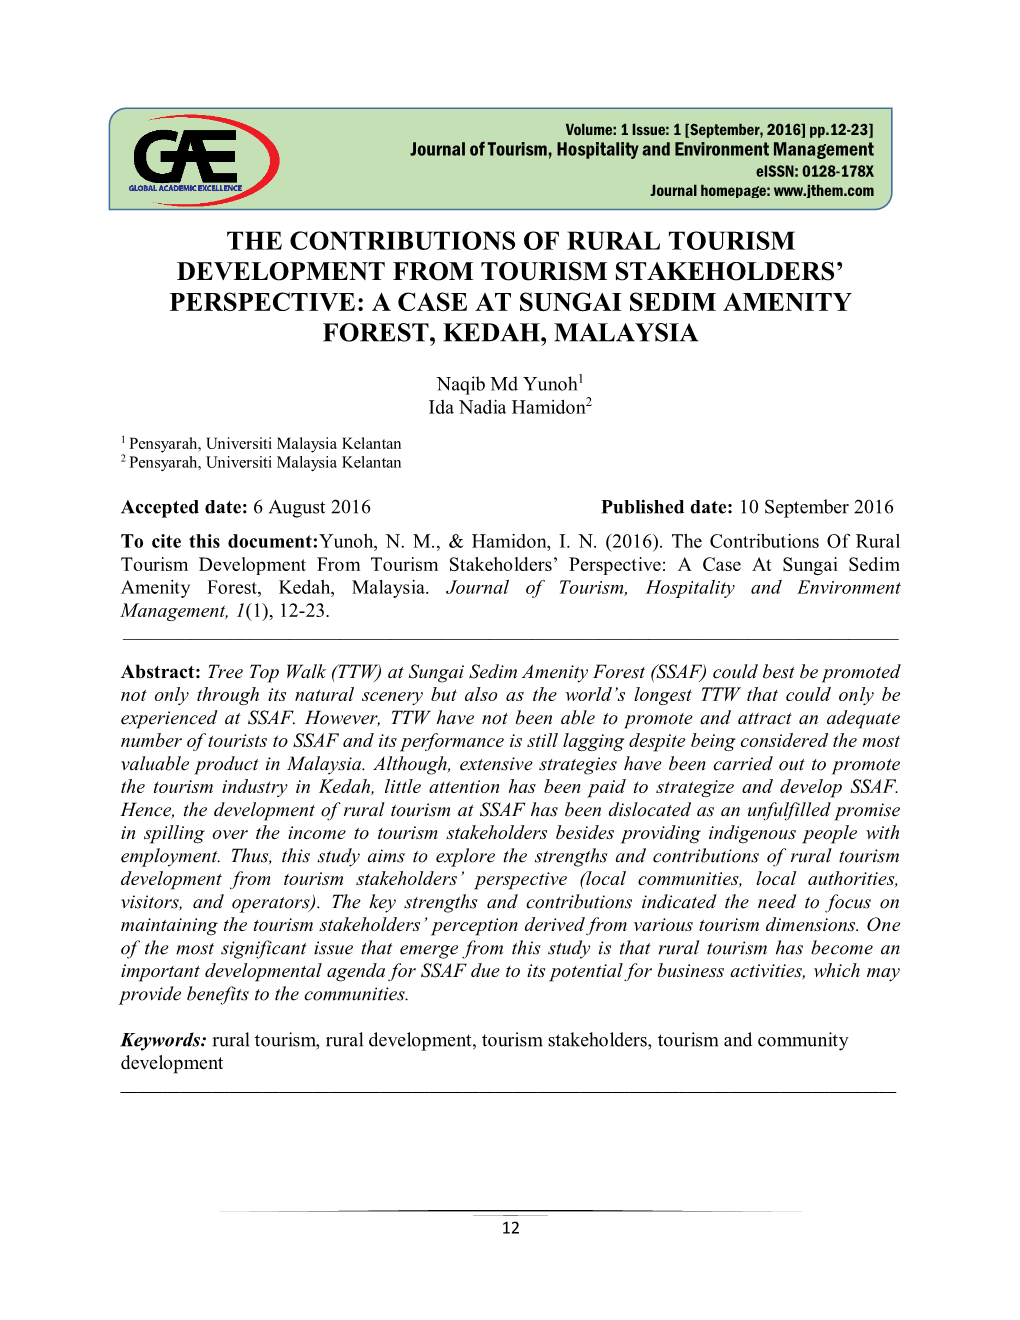 A Case at Sungai Sedim Amenity Forest, Kedah, Malaysia